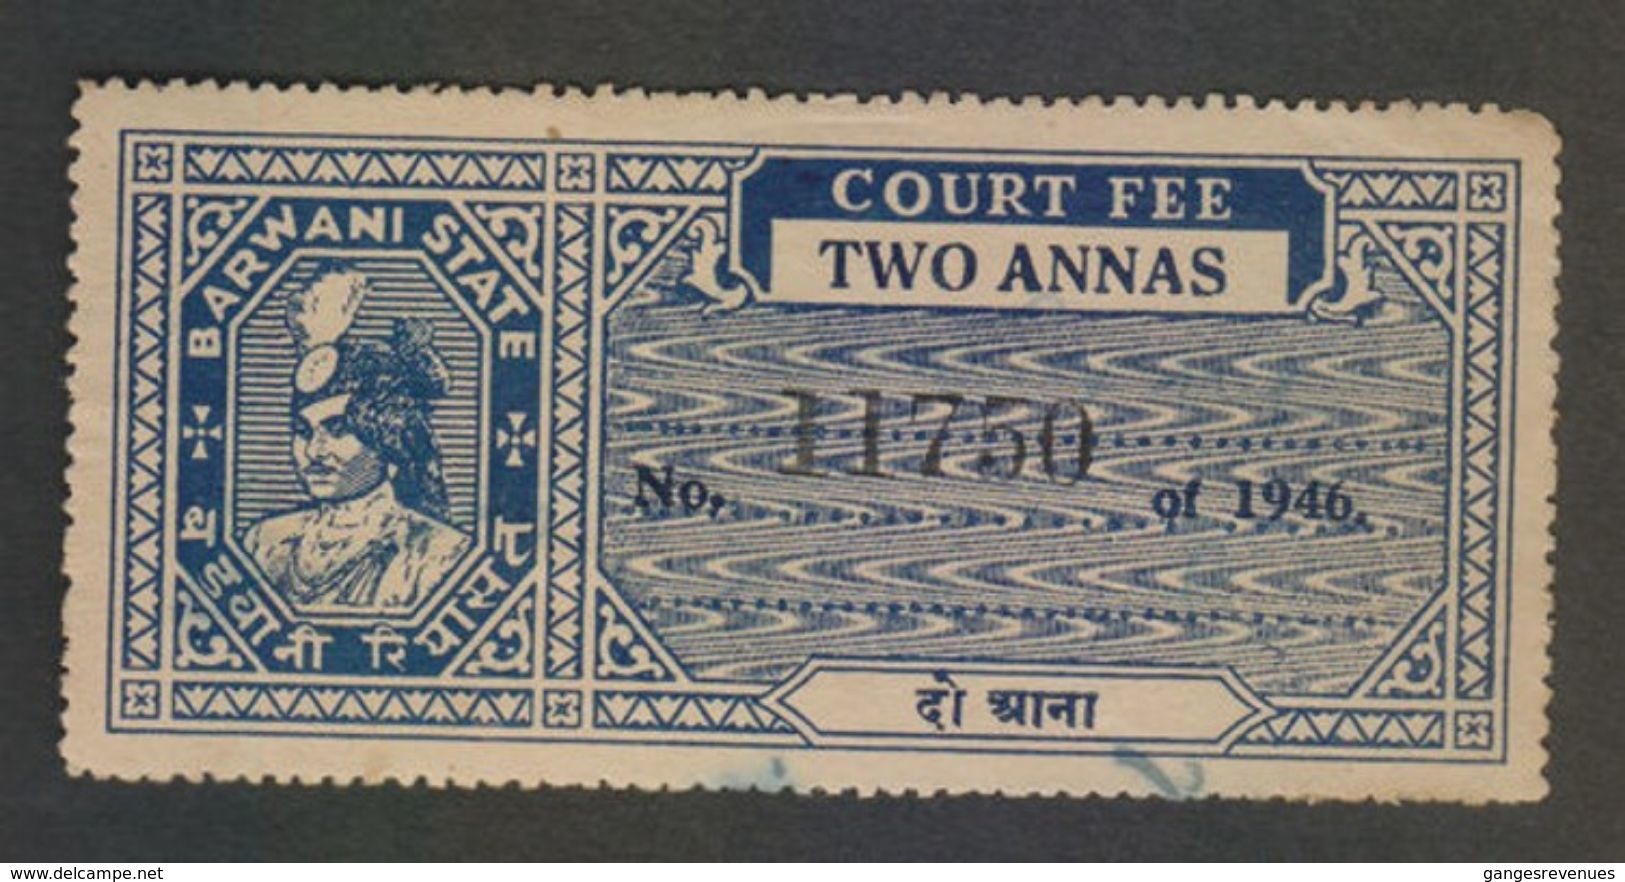 BARWANI  State  2A  Court Fee  Type 16  #  97813  India  Inde  Indien Revenue Fiscaux - Barwani